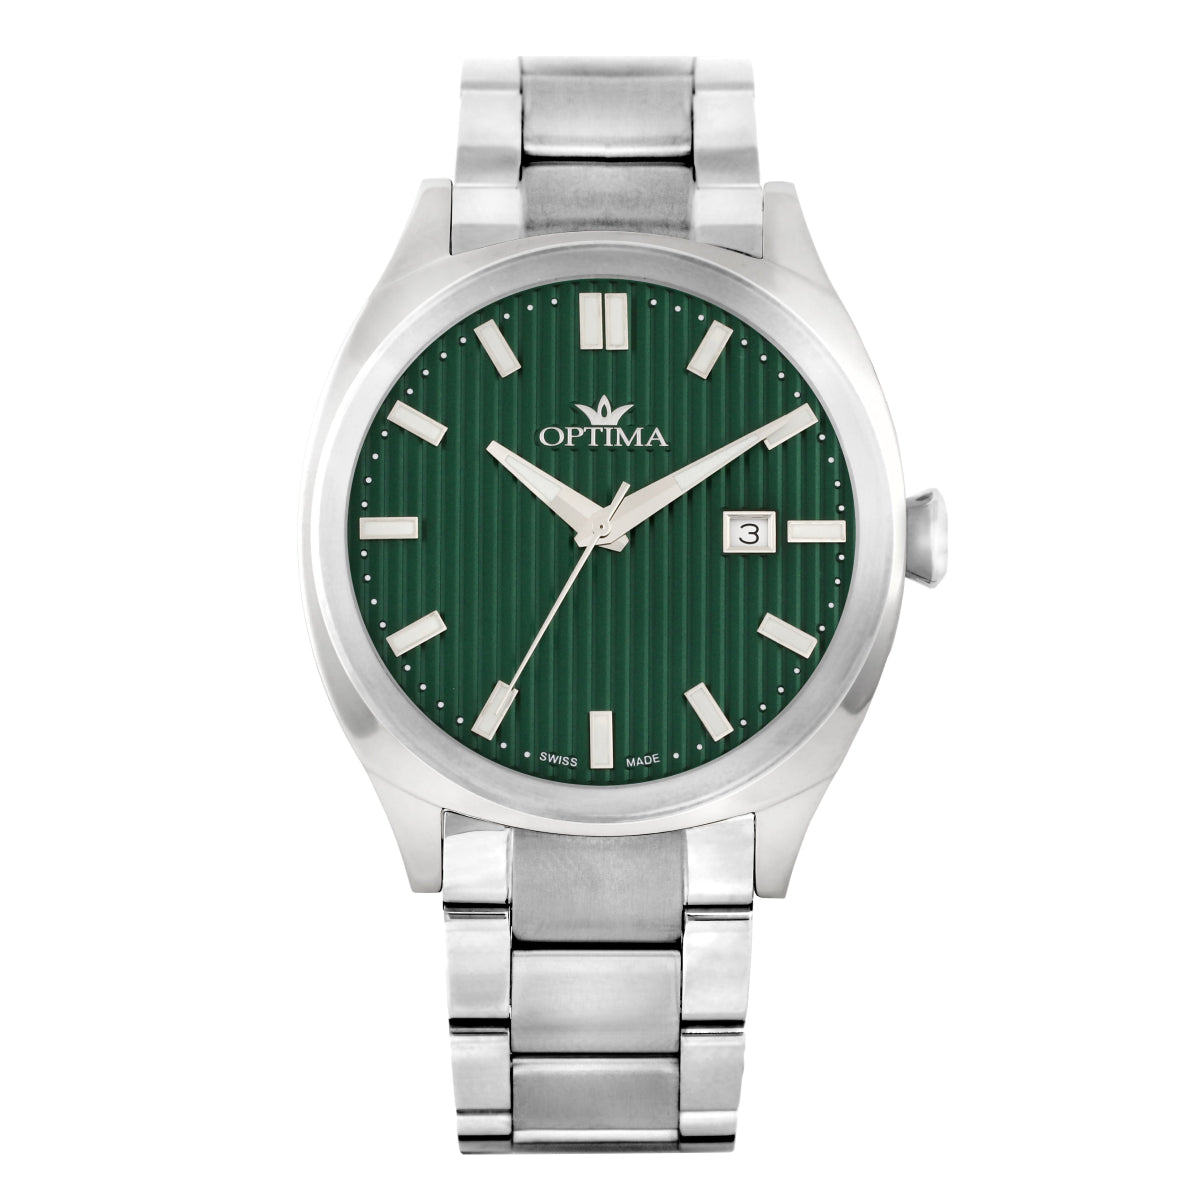 Optima Men's Swiss Quartz Watch with Green Dial - OPT-0049